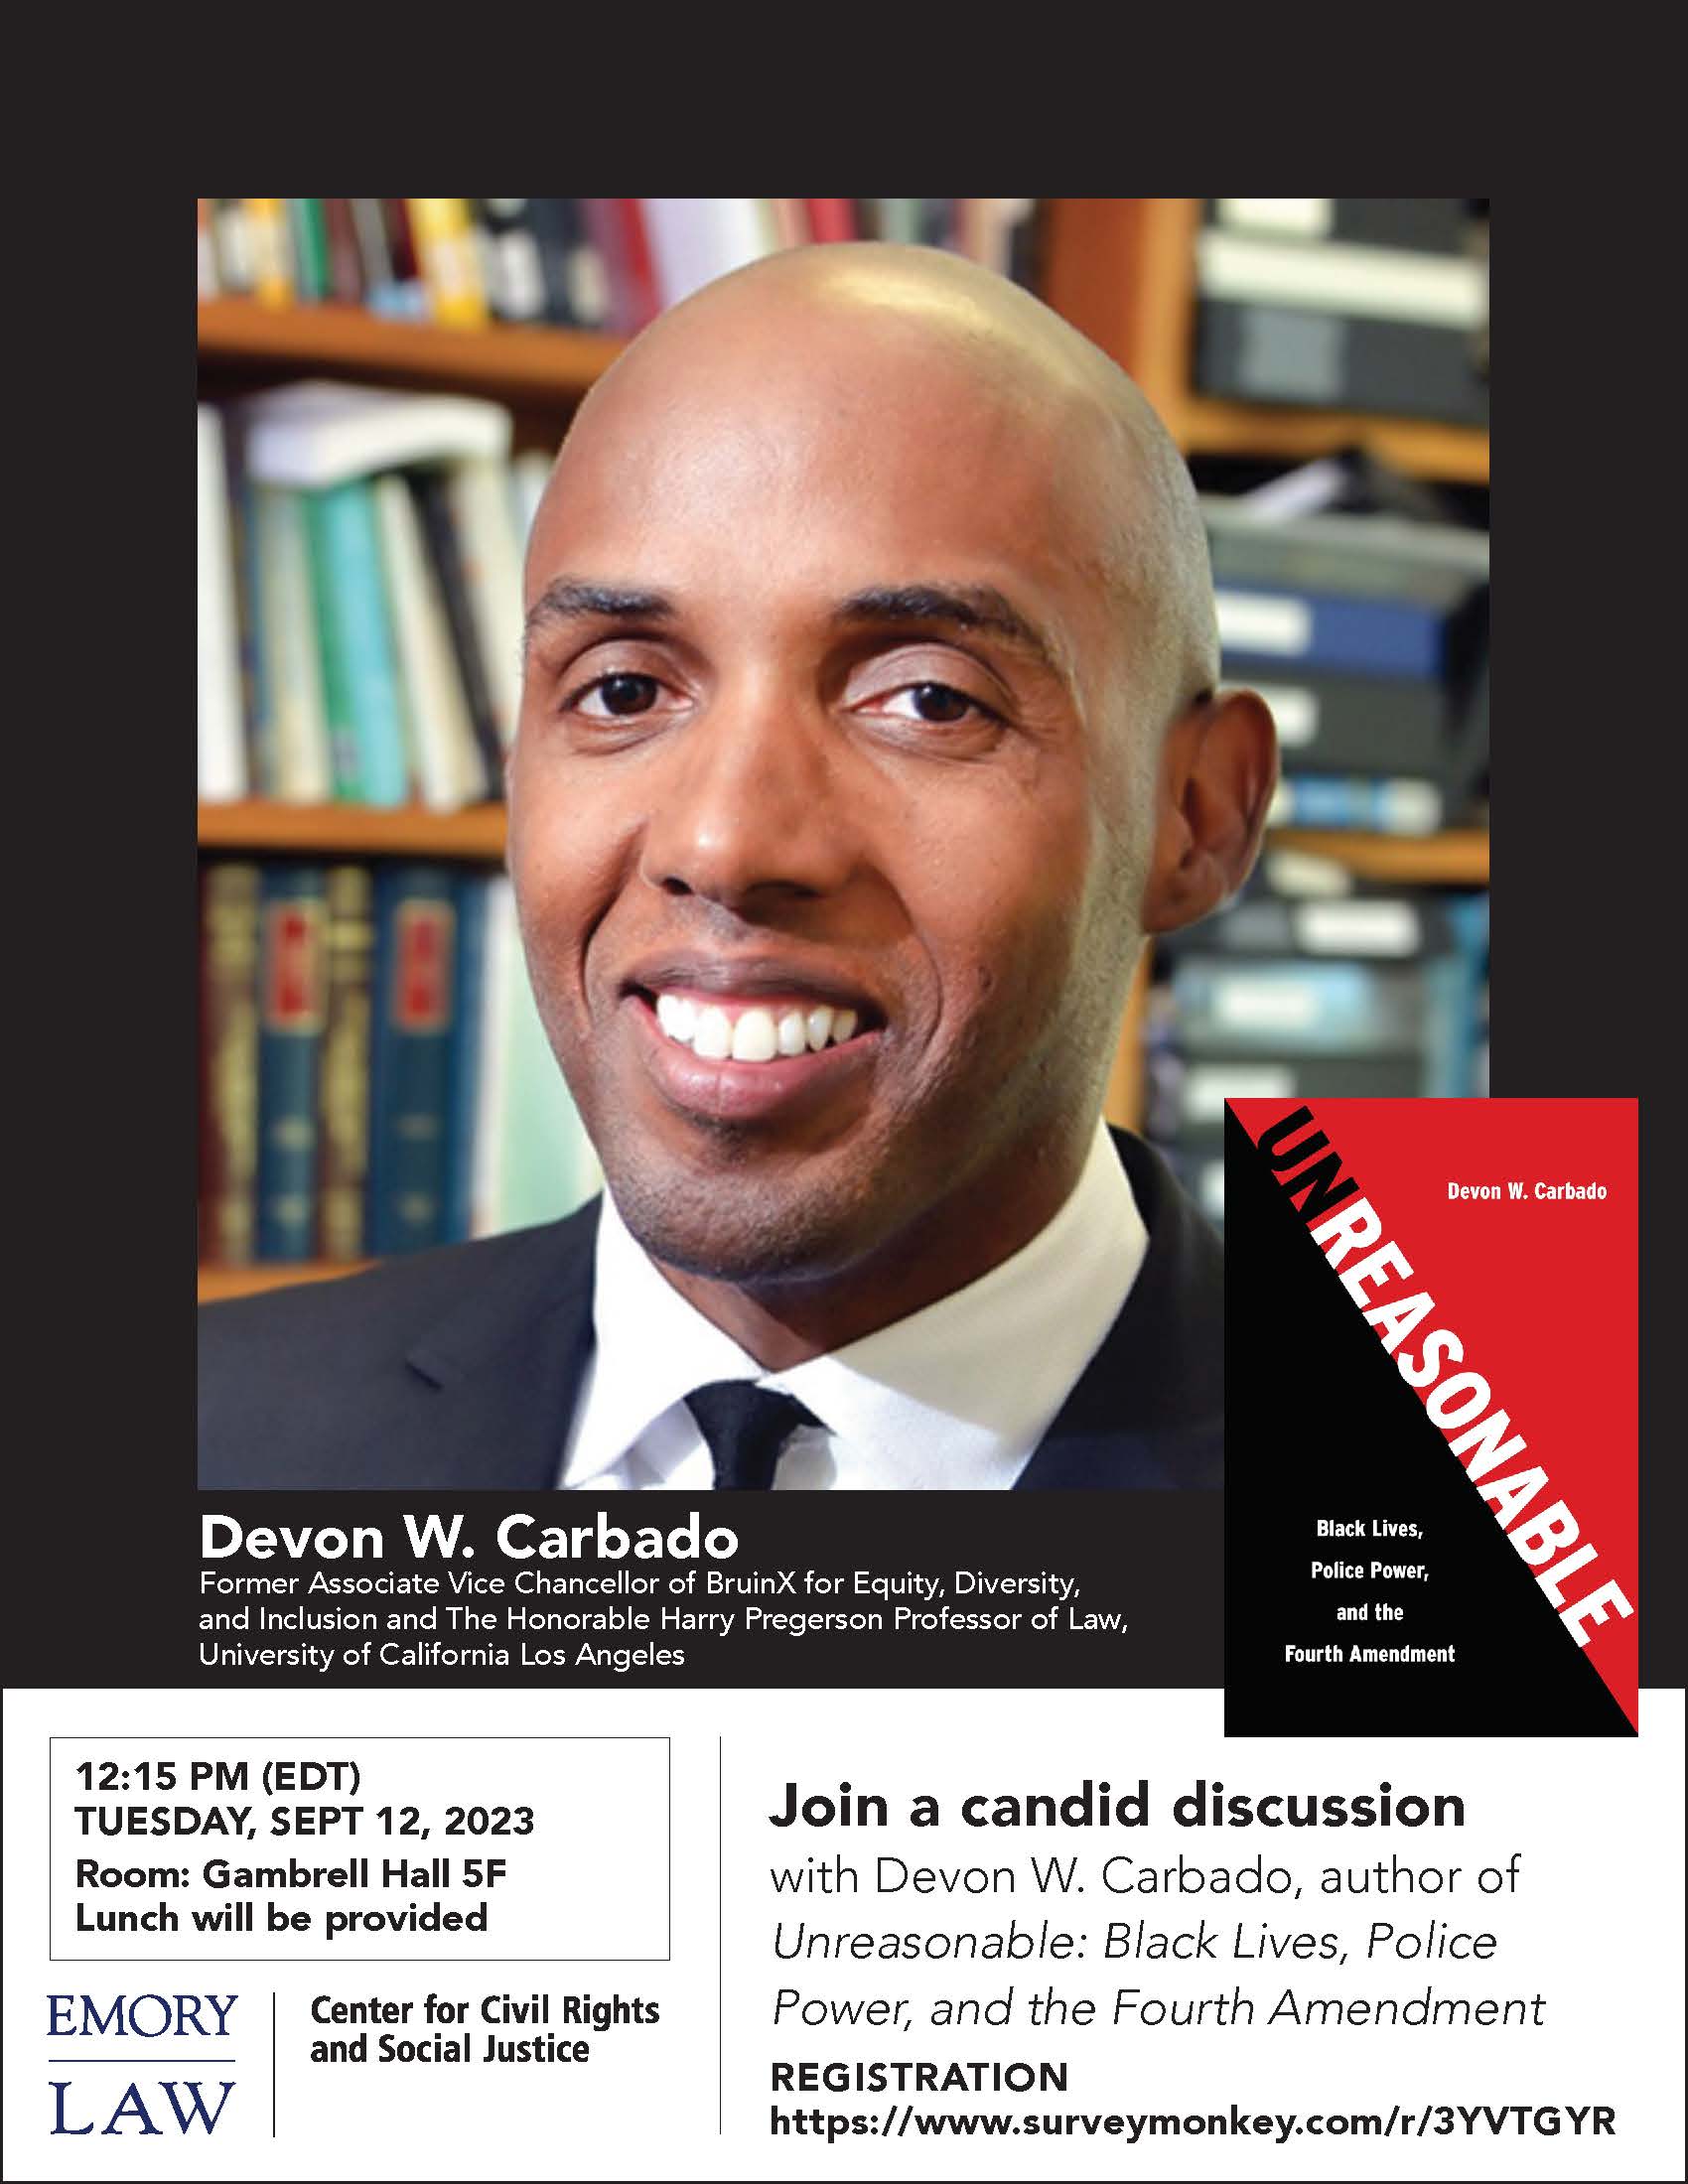 Devon W. Carbado, author of Unreasonable: Black Lives, Police Power, and the Fourth Amendment